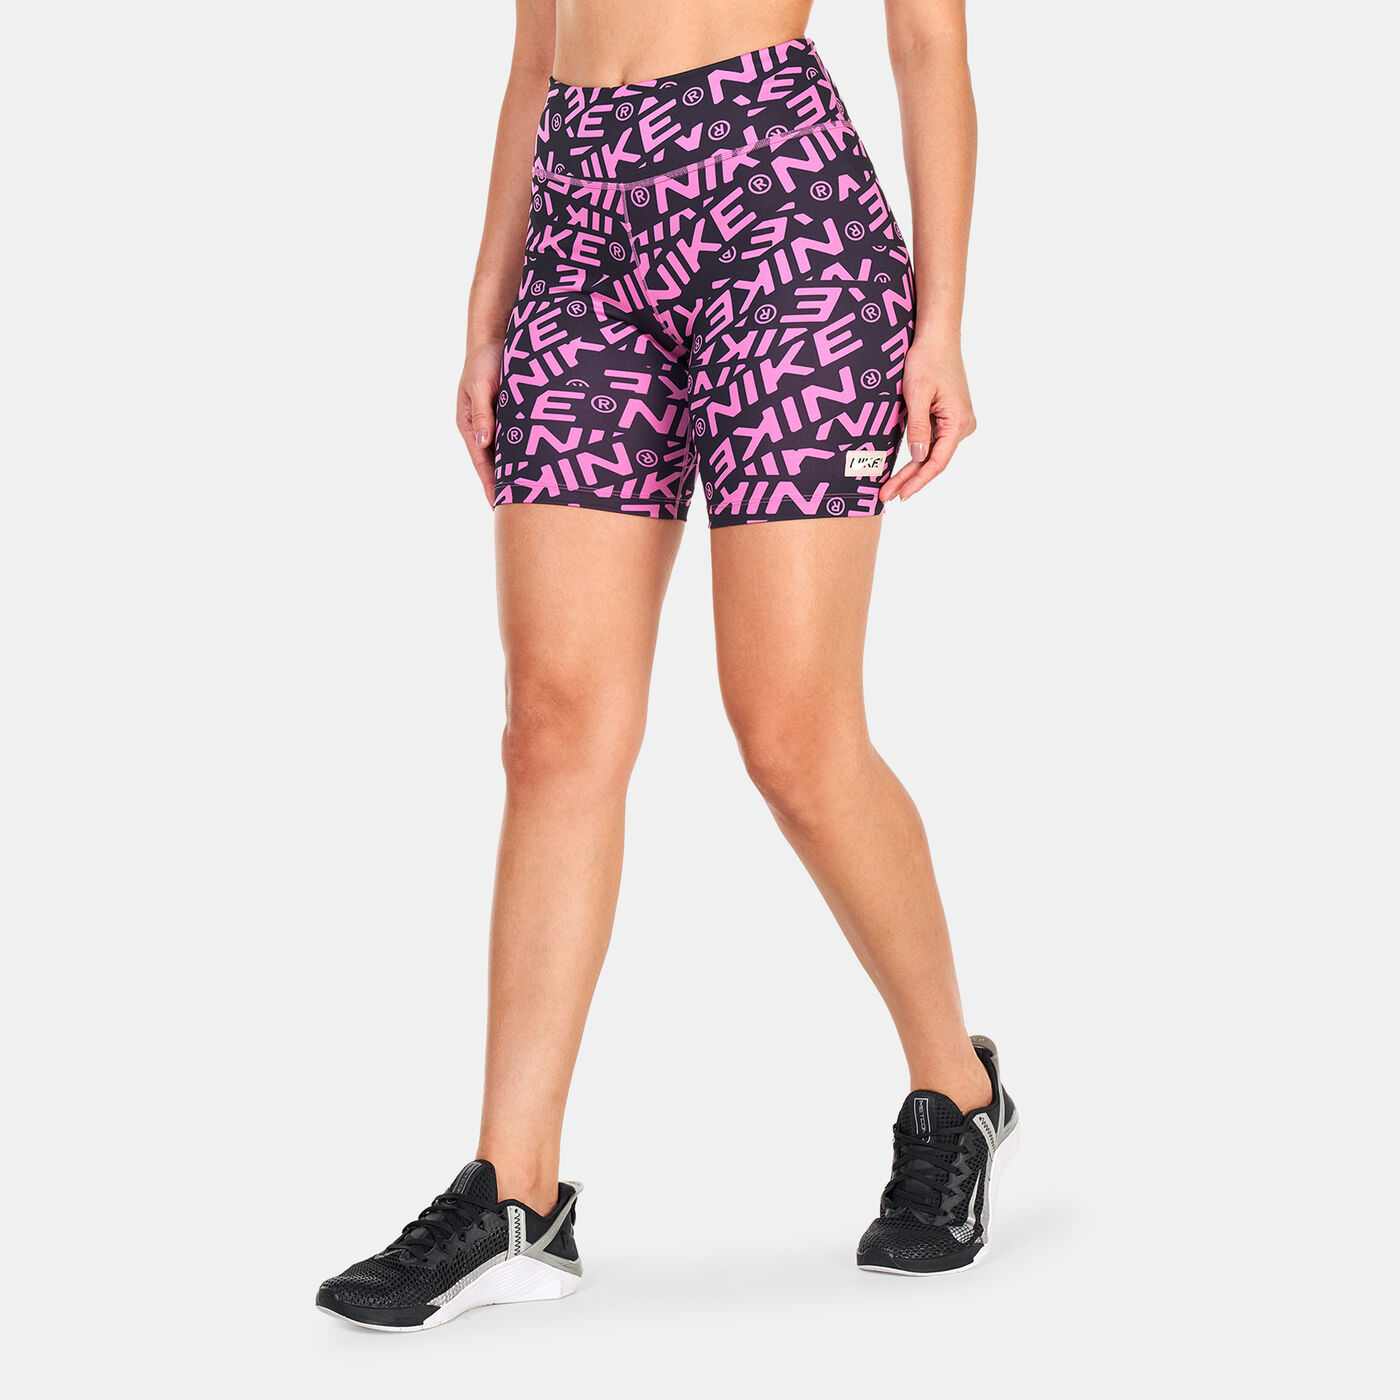 Women's Mid-Rise 7-inch Printed Bike Shorts